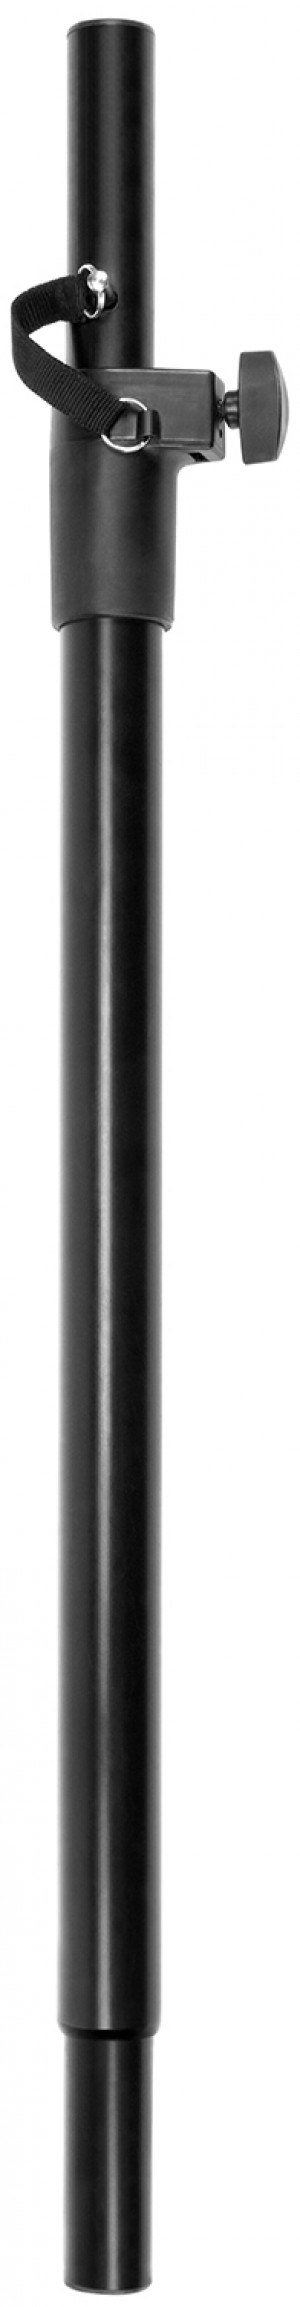 Mackie SPM200 Speaker Pole